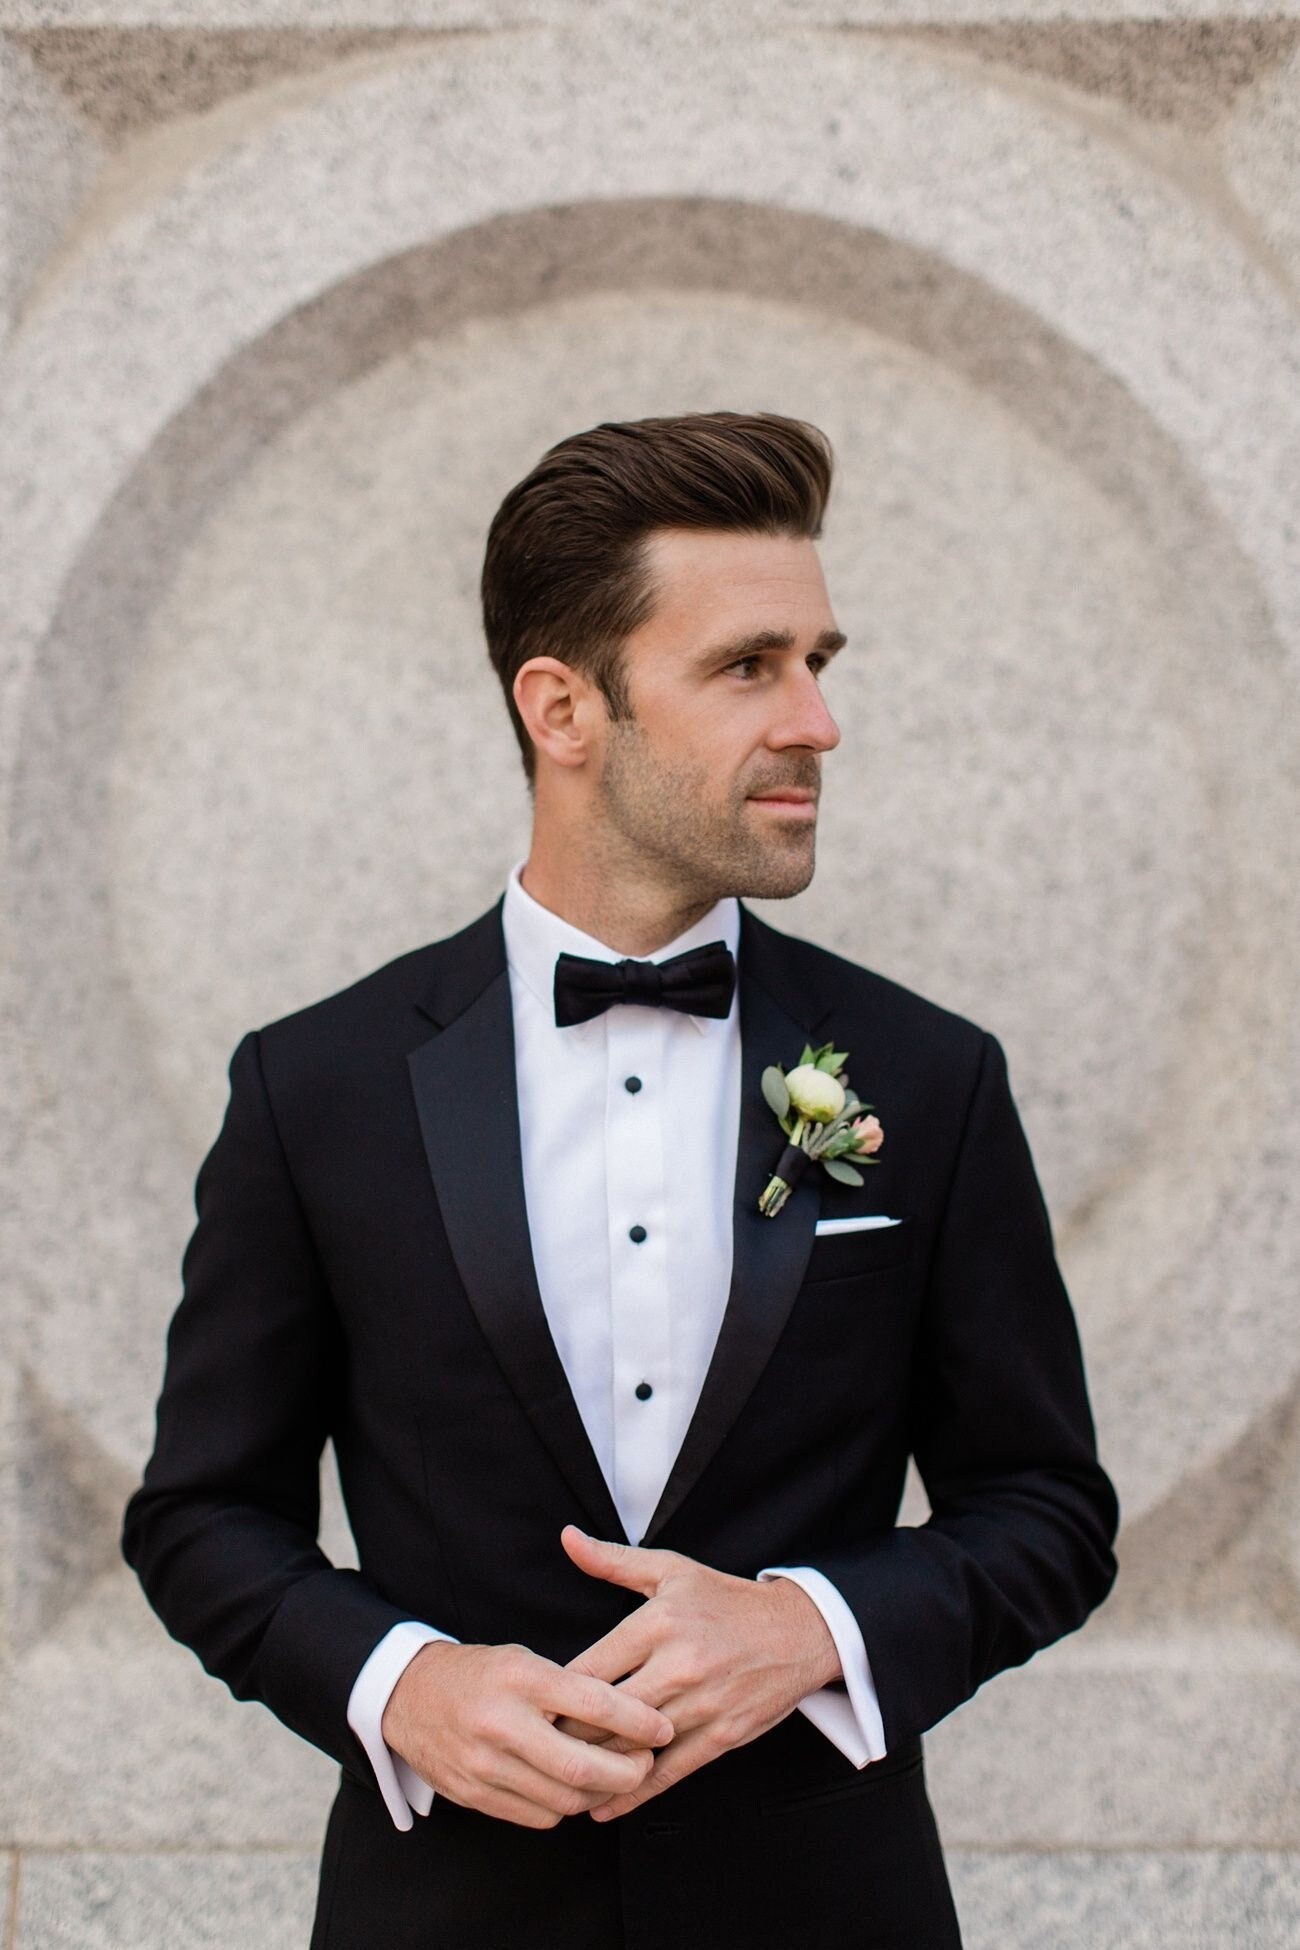 Mens Black 2 Piece Tuxedo Suit Wedding Suit Groom Wear Suit 2 Piece Suit  Suit Party Wear Suit for Men Dinner Suit -  Canada